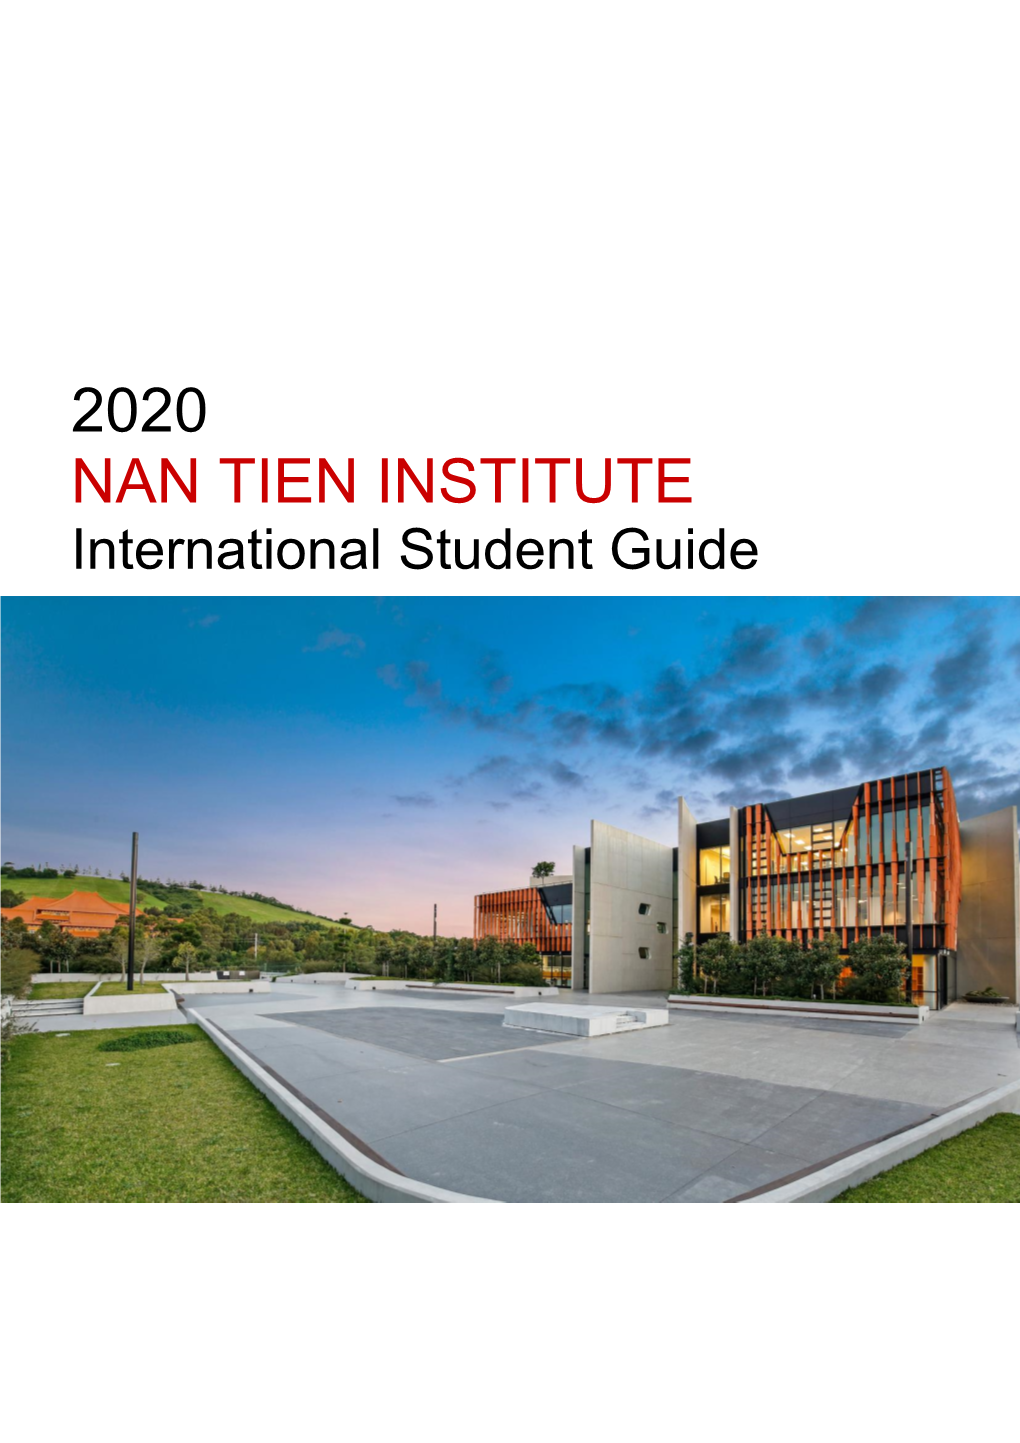 2020 NAN TIEN INSTITUTE International Student Guide